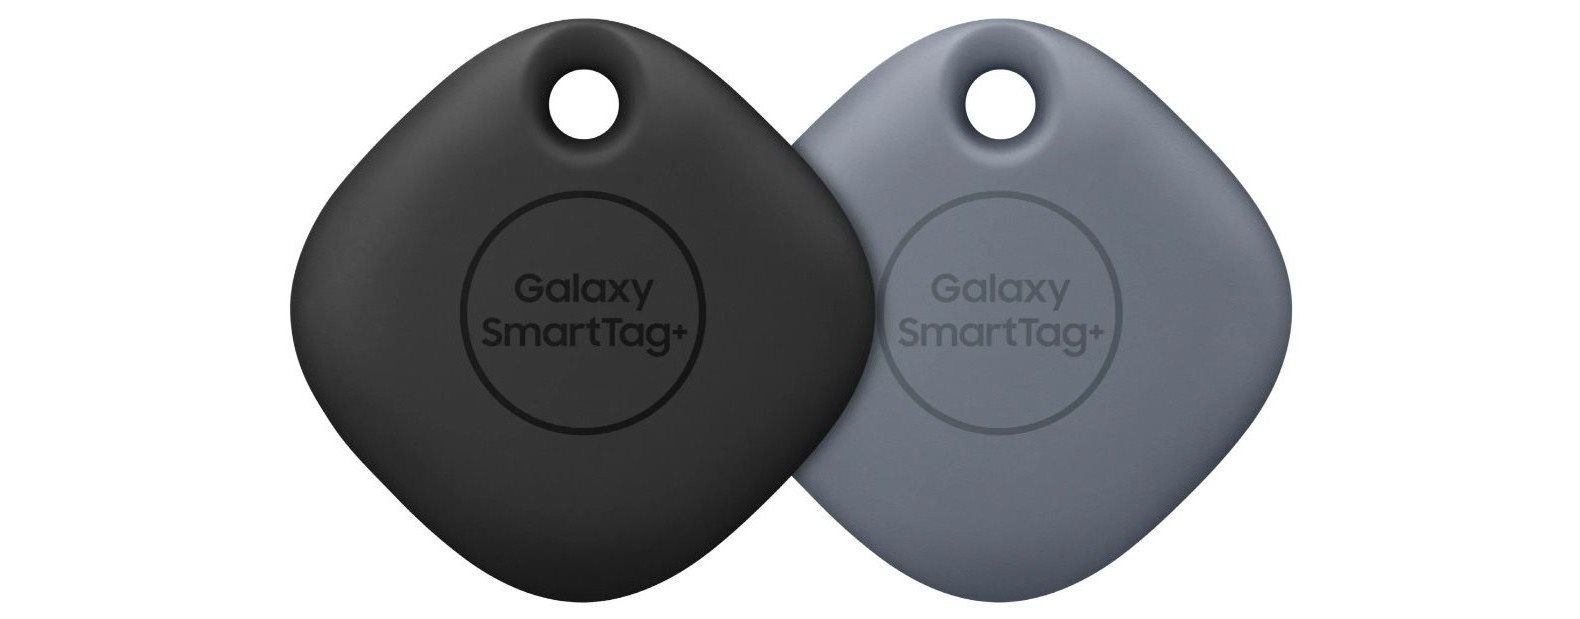 Apple AirTag, konkurence Samsung Galaxy SmartTag+